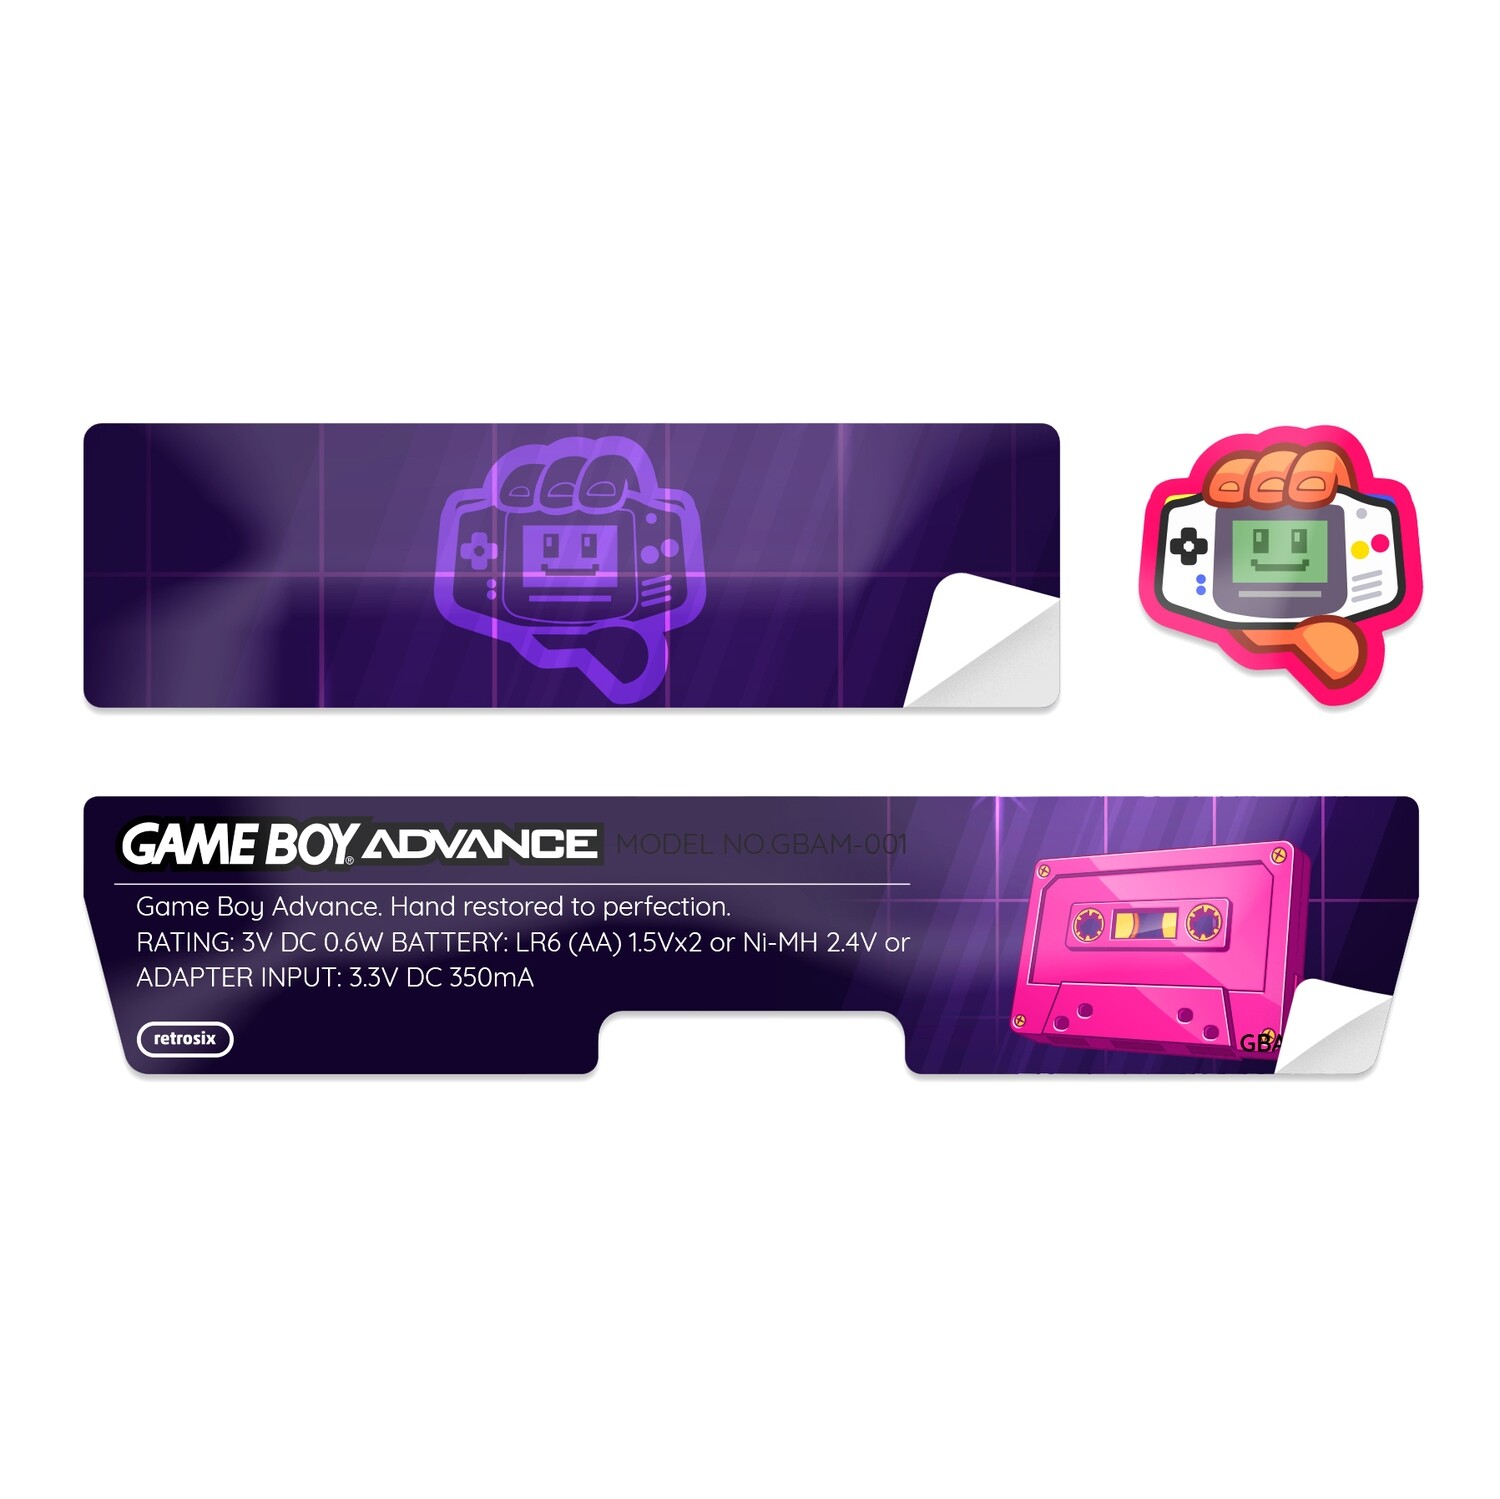 Game Boy Advance Sticker (Vaporwave Tape)